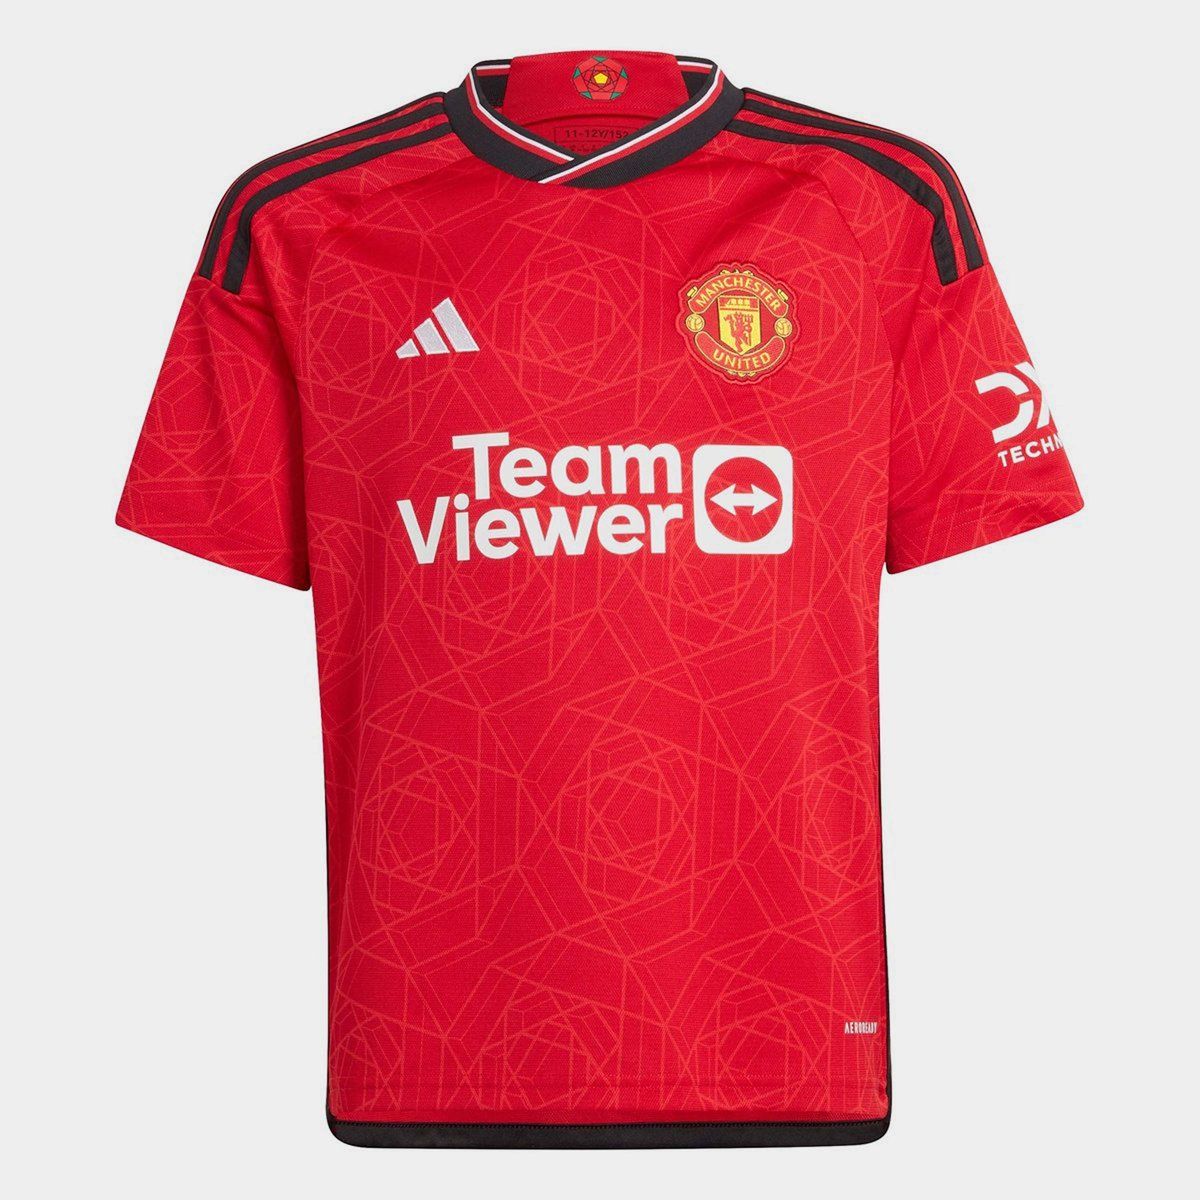 Official Football Shirts & Kits - Lovell Soccer